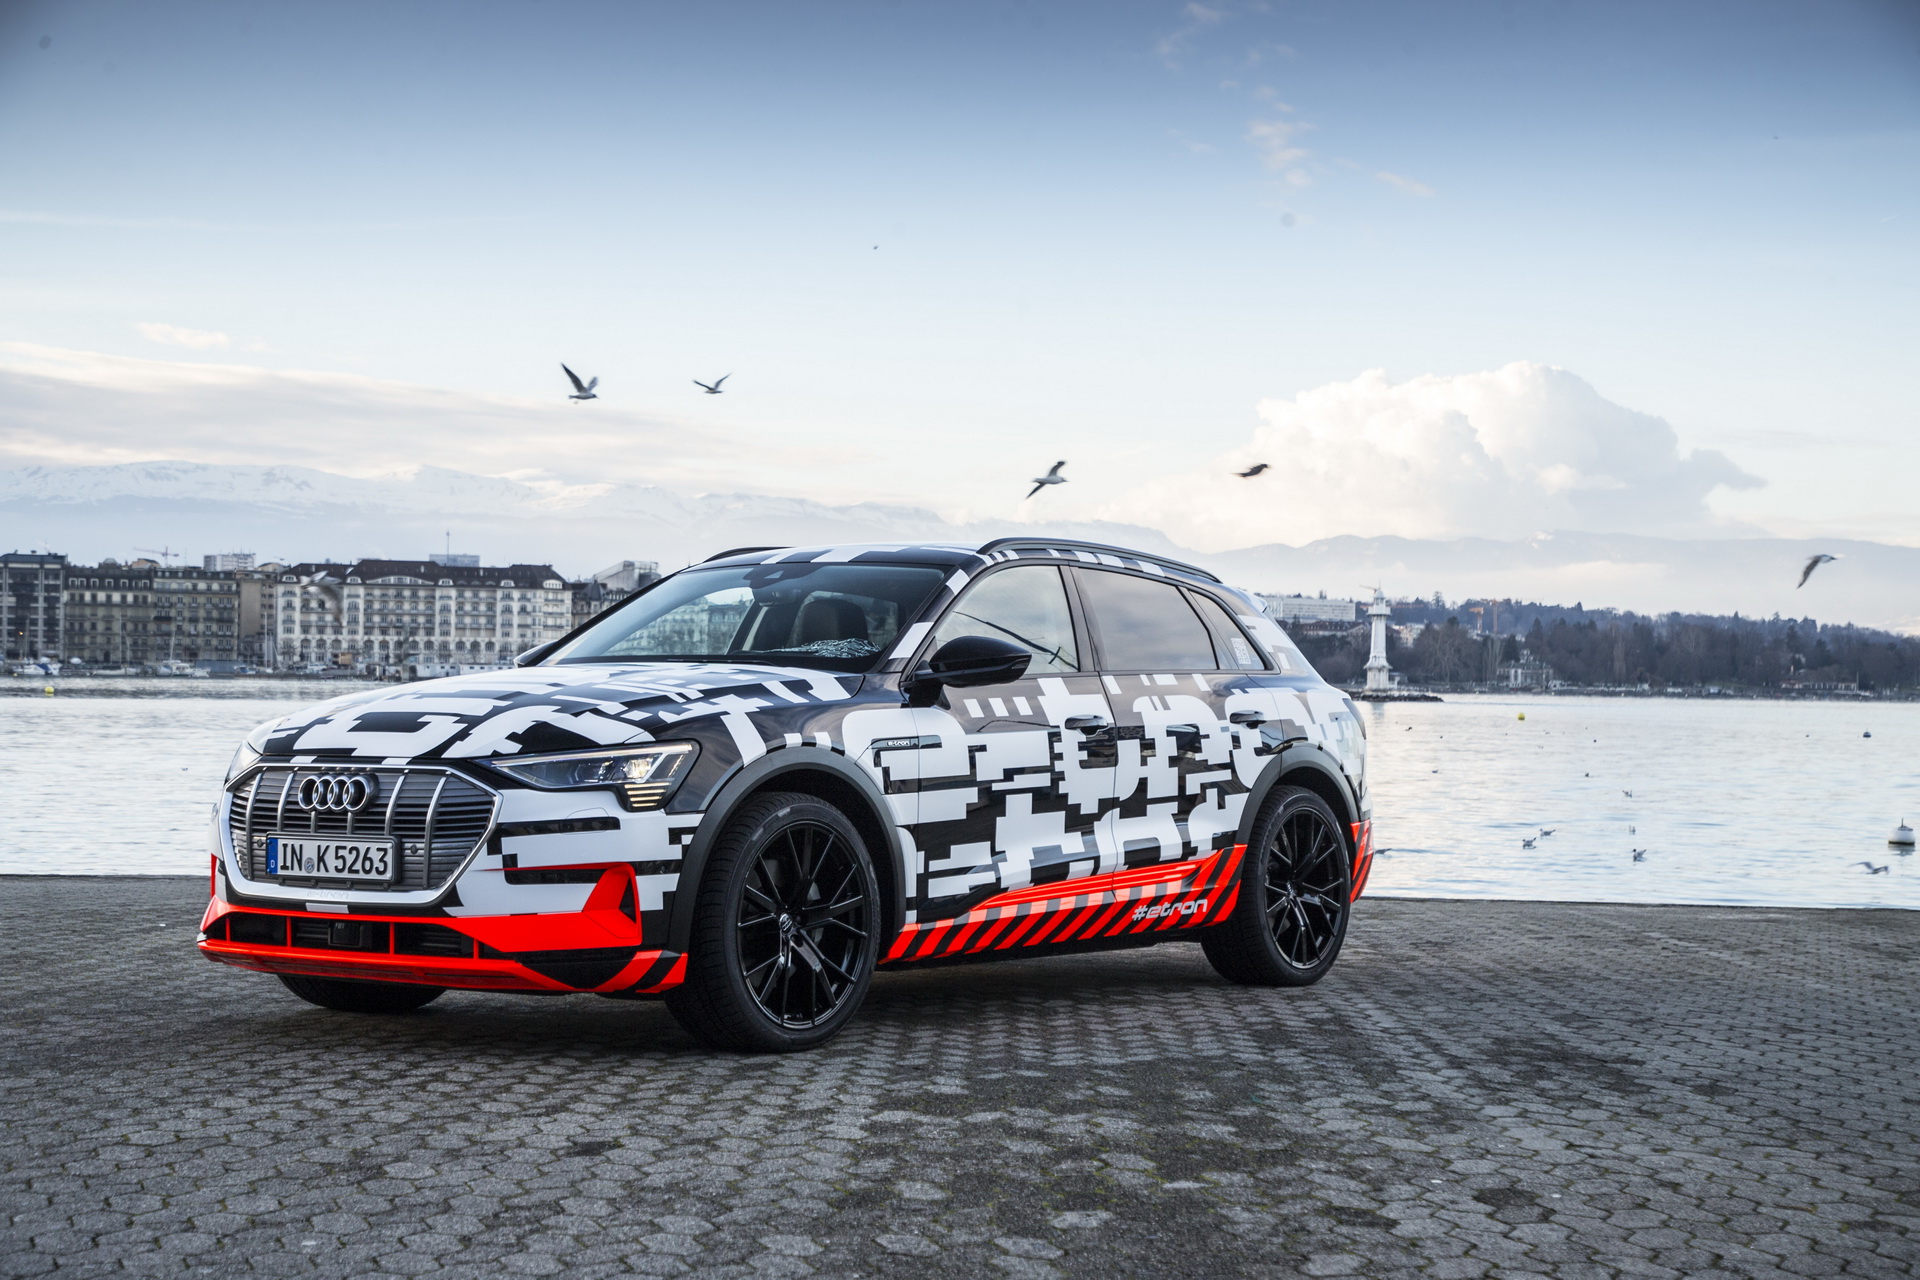 The Audi e-tron prototype in Geneva